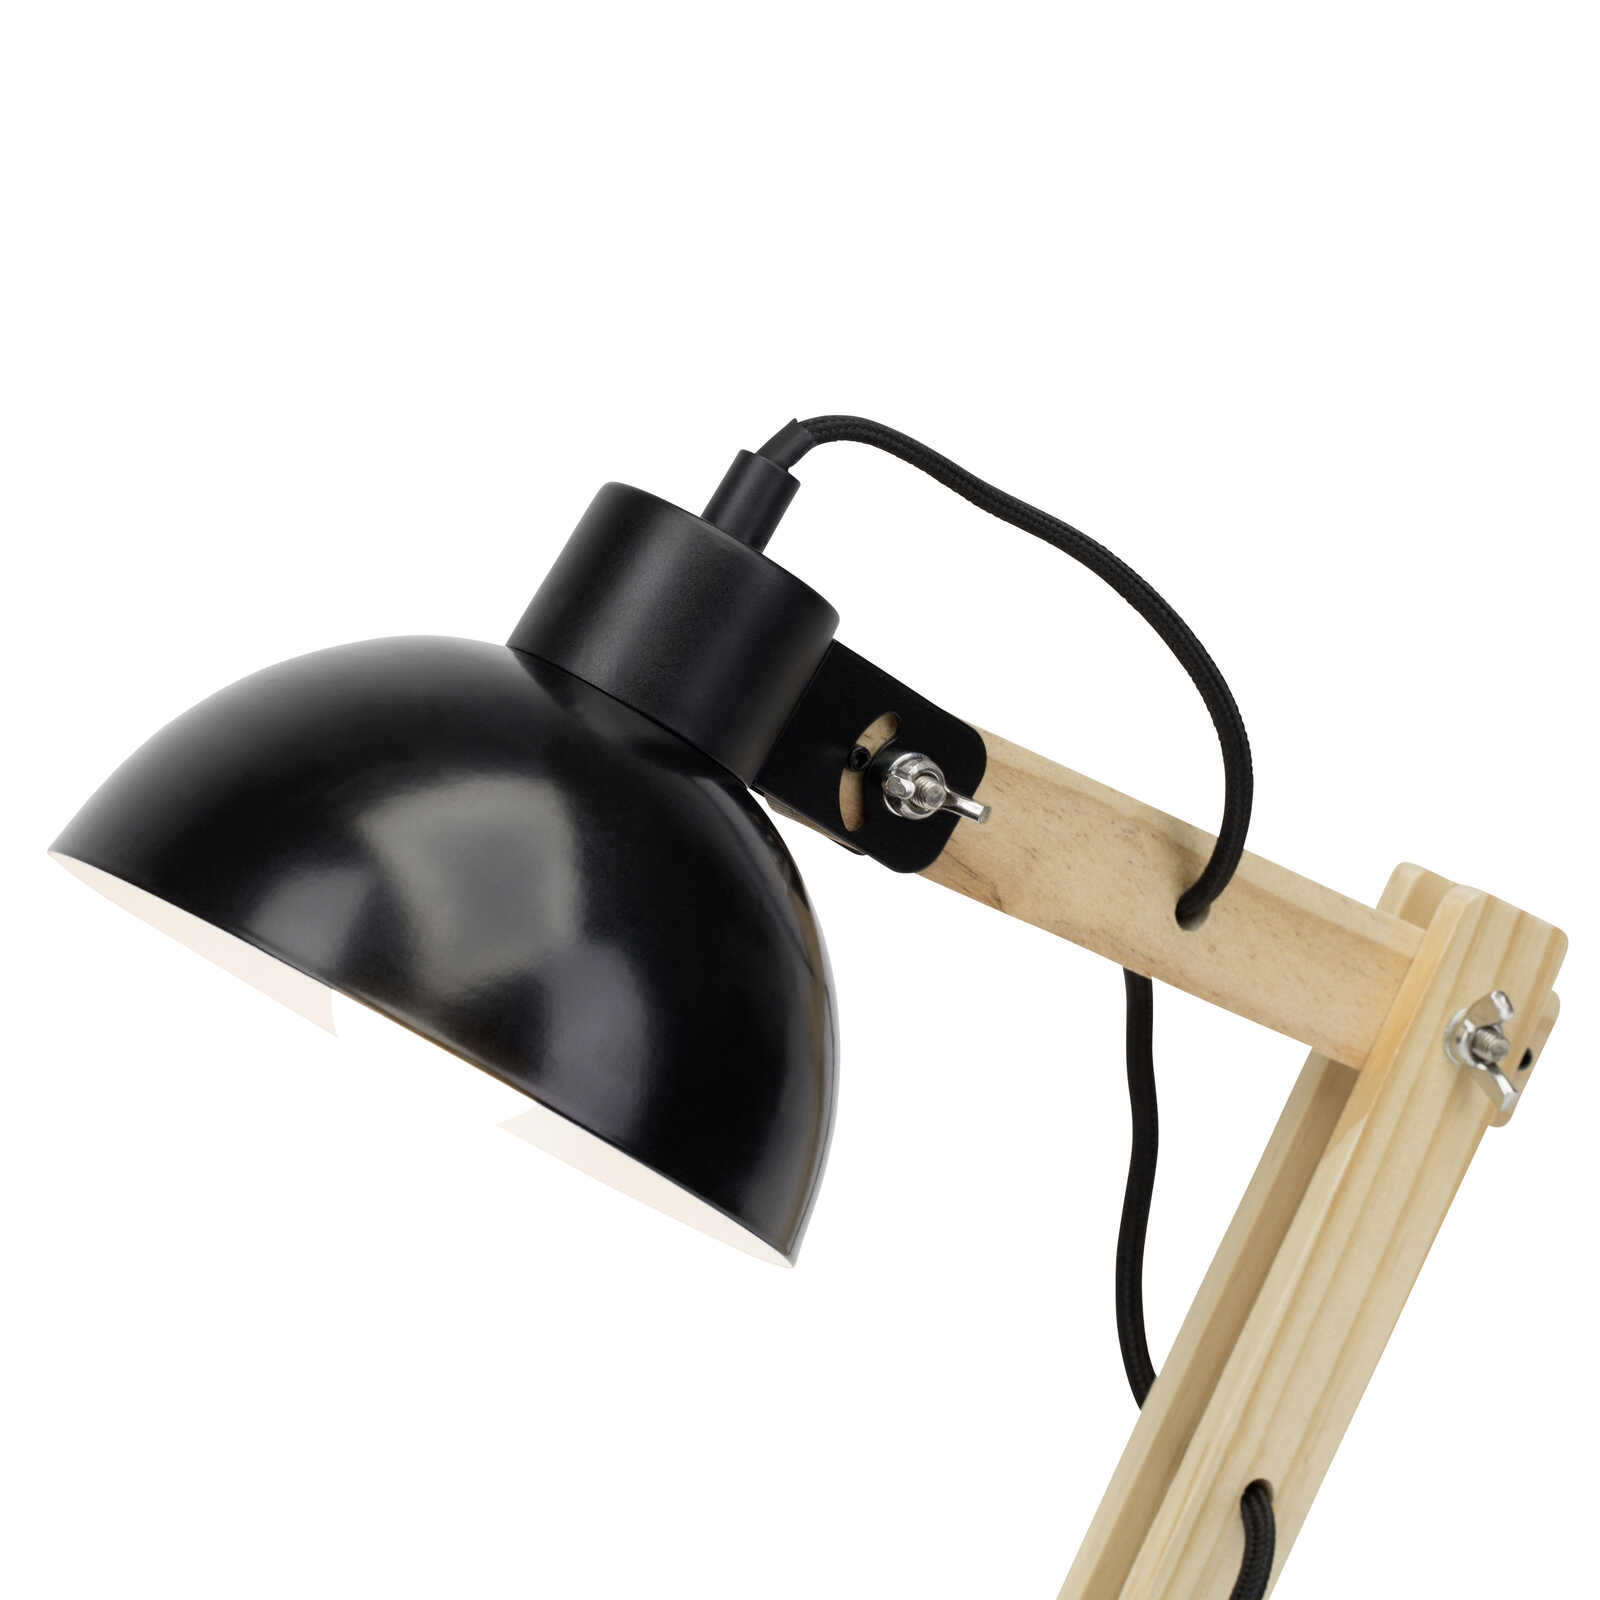             Wooden table lamp - Lisa 2 - Black
        